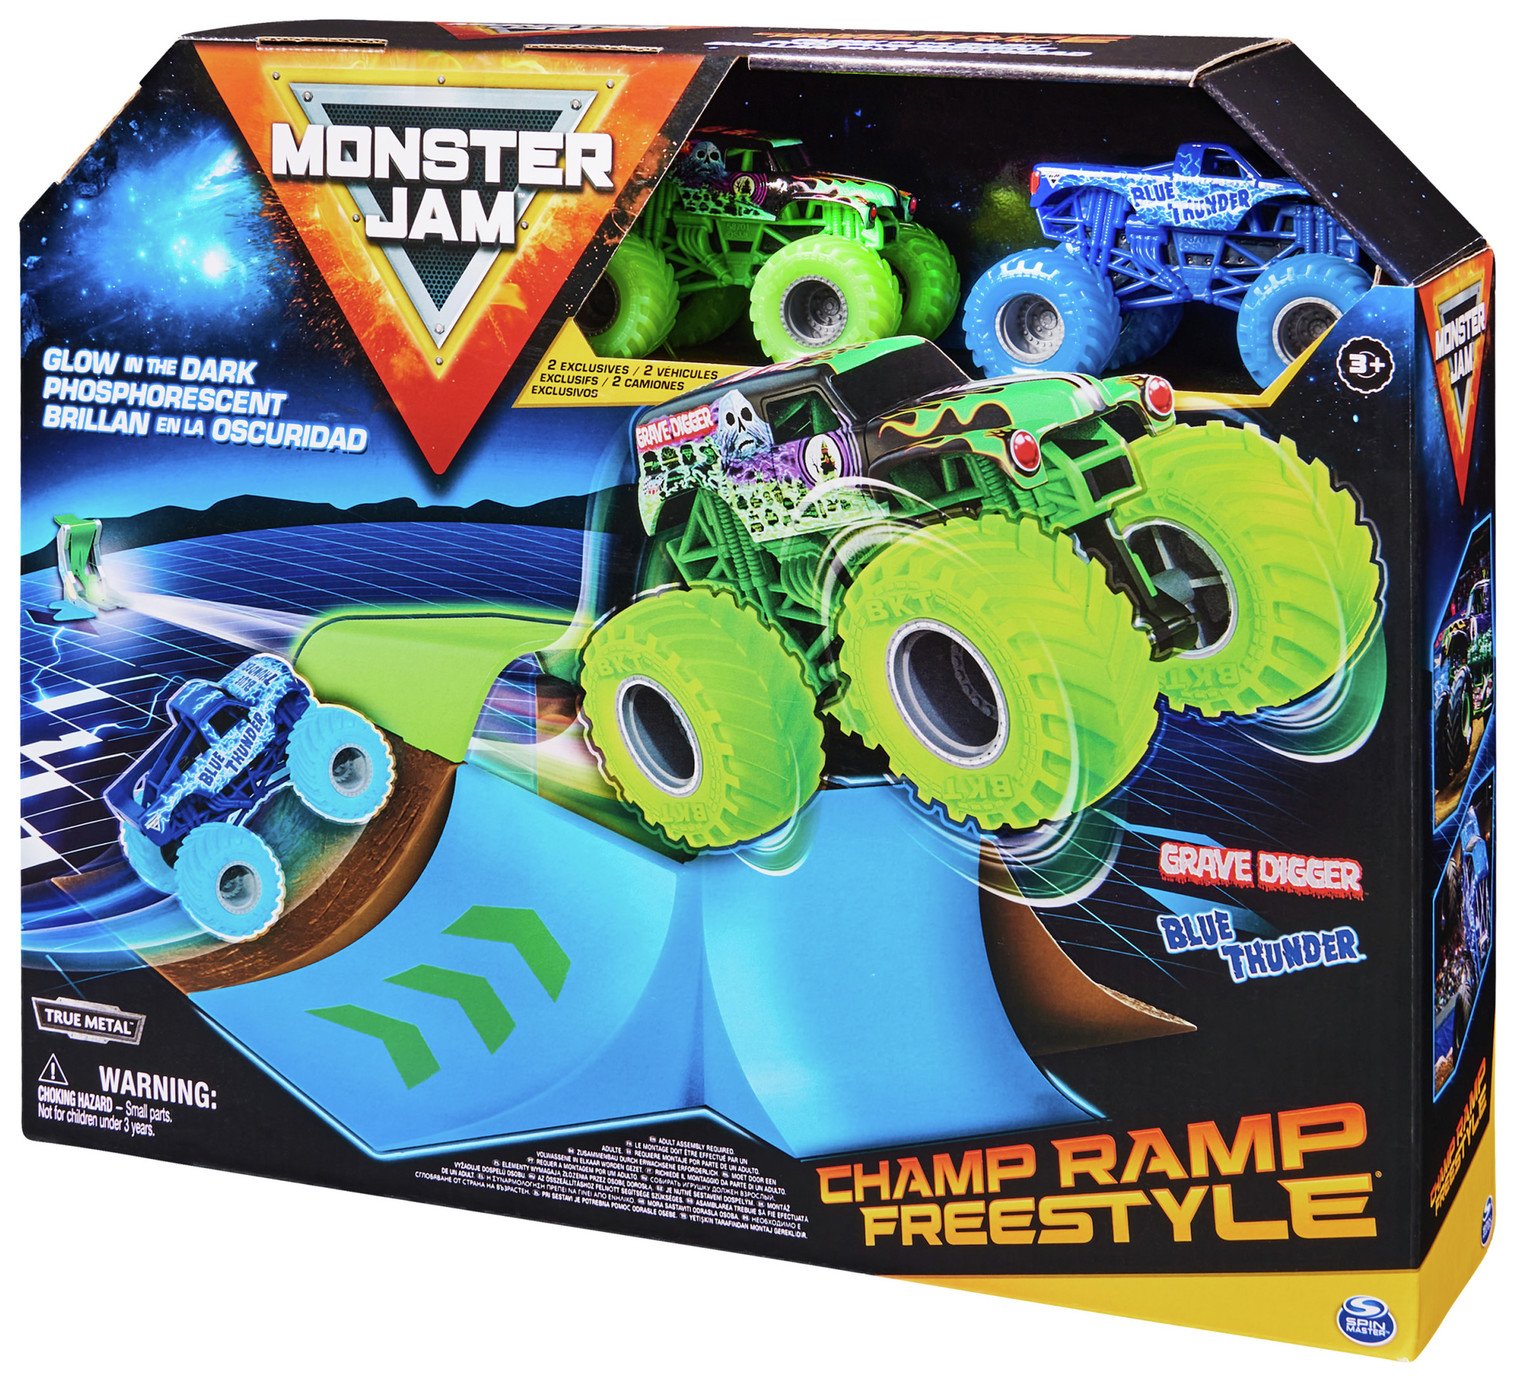 Monster Jam Champ Ramp Grave Digger 1:16 Playset review